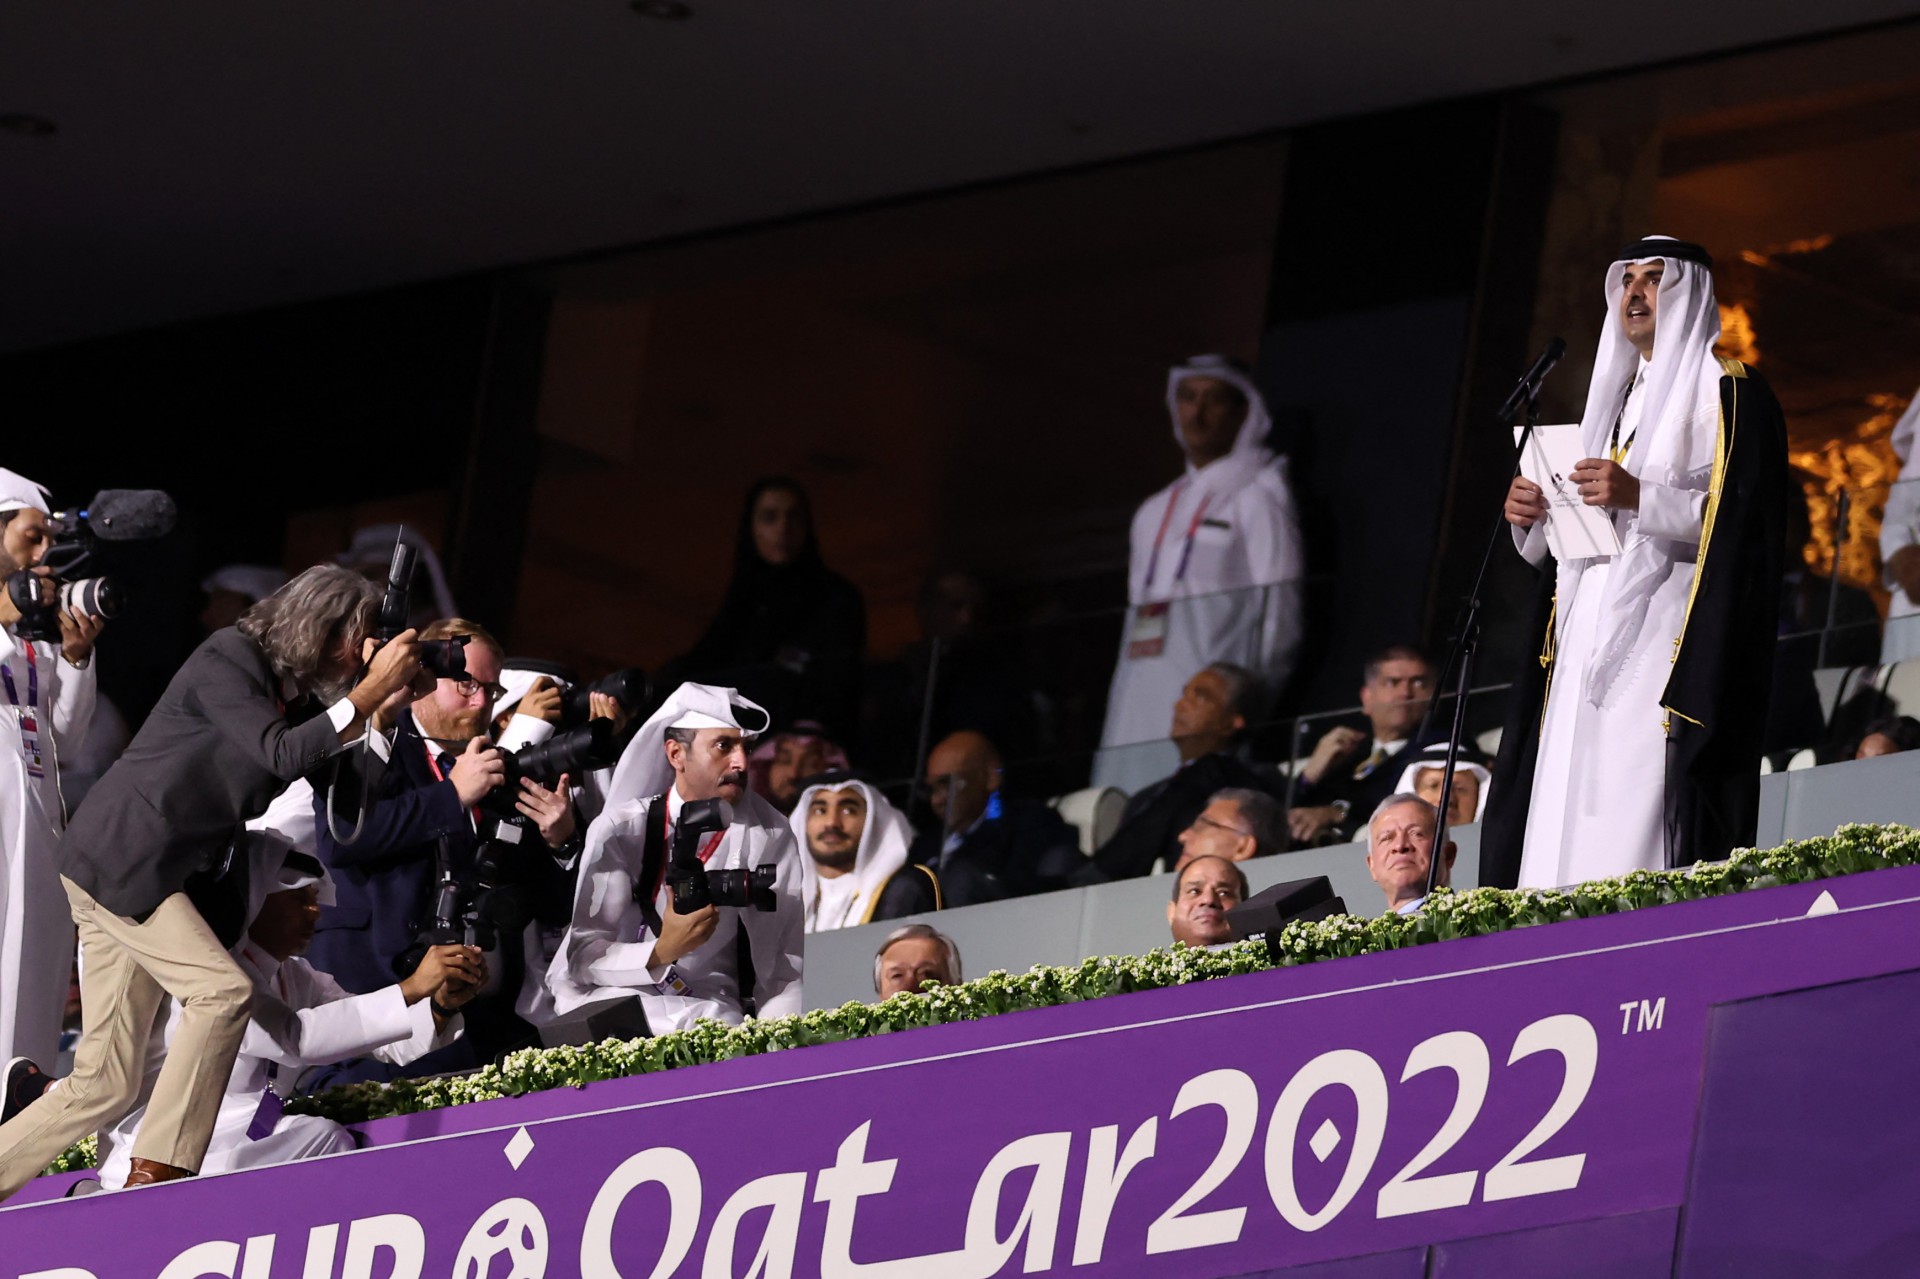 Qatar's Emir Sheikh Tamim bin Hamad al-Thani (R) delivers a speech next to the King of Jordan Abdullah II (2ndR) during the opening ceremony ahead of the Qatar 2022 World Cup Group A football match between Qatar and Ecuador at the Al-Bayt Stadium in Al Khor, north of Doha on November 20, 2022.
KARIM JAAFAR / AFP - KARIM JAAFAR / AFP